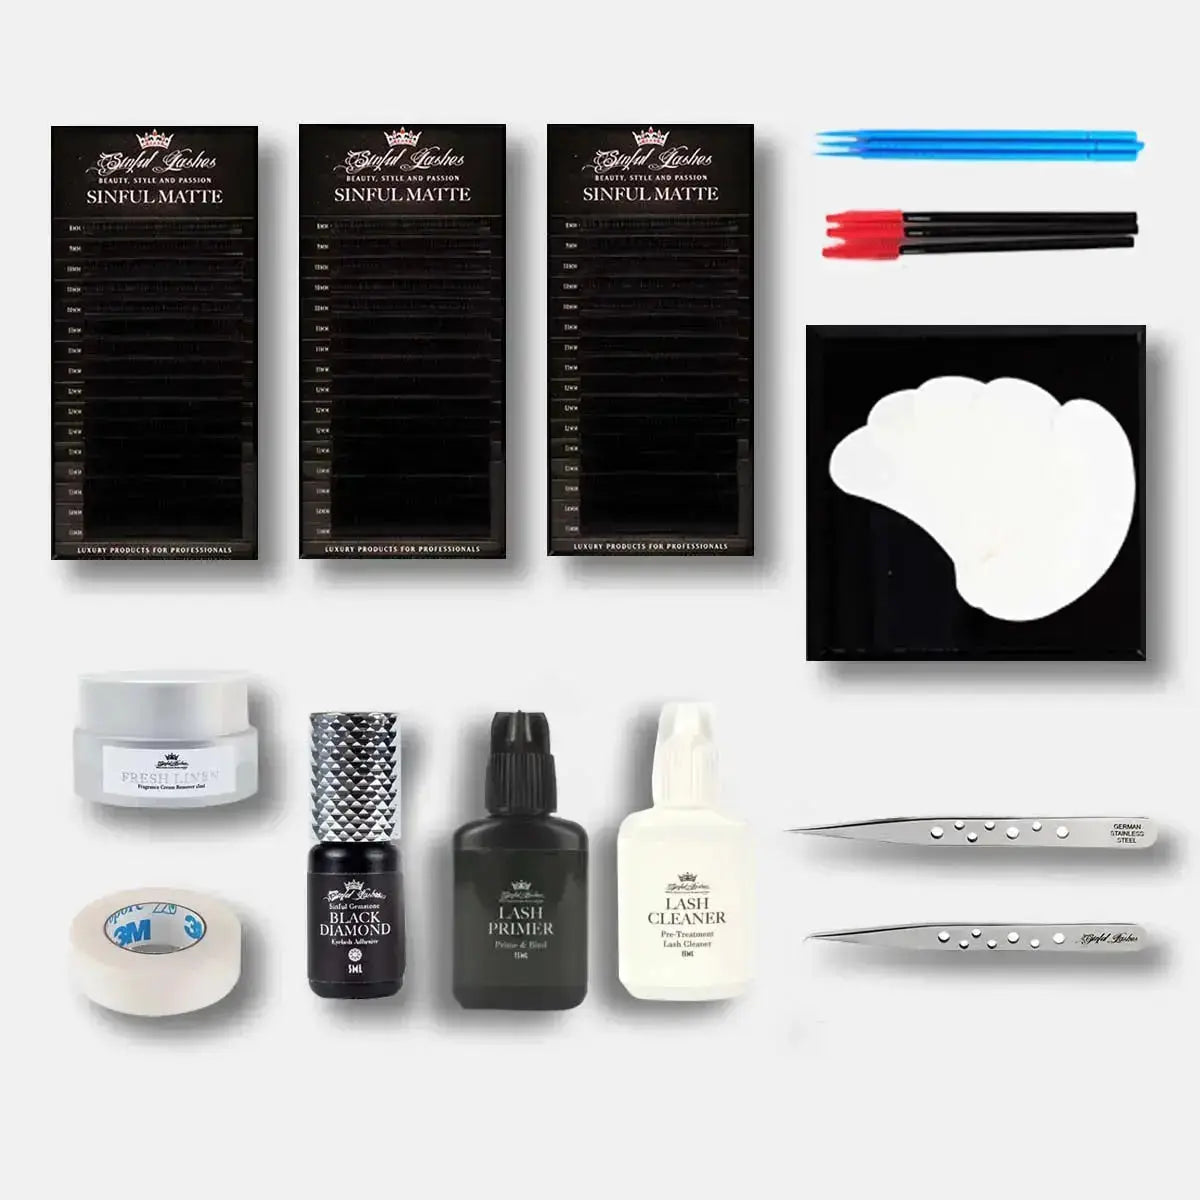 Classic Tweezers | Bella Lash | Eyelashes, Adhesives, Eyelash Supplies for Lash Artists